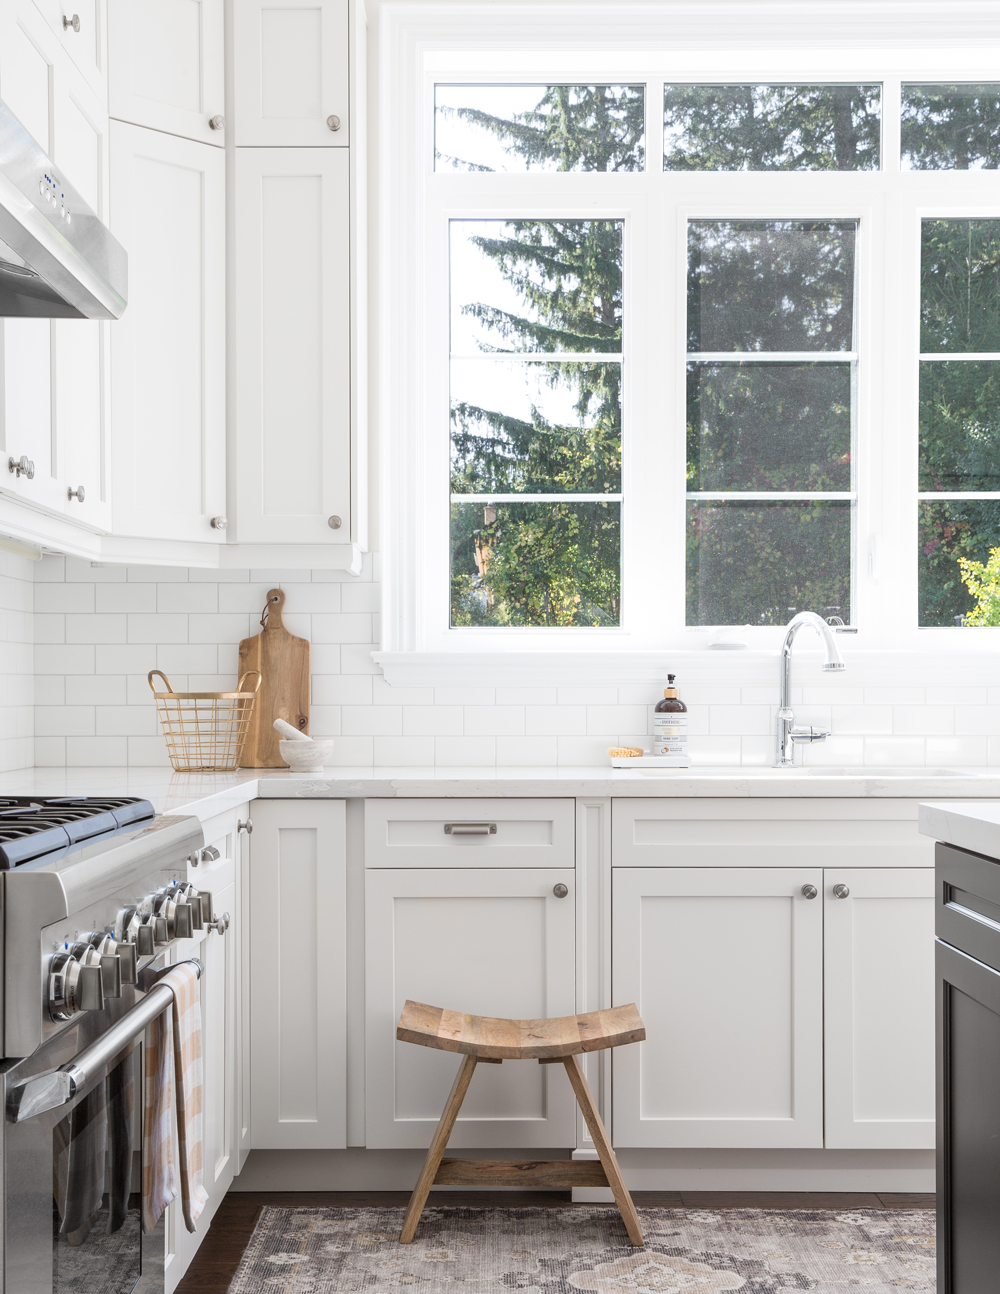 white kitchen, window, sink, wooden stool in front of cupboard